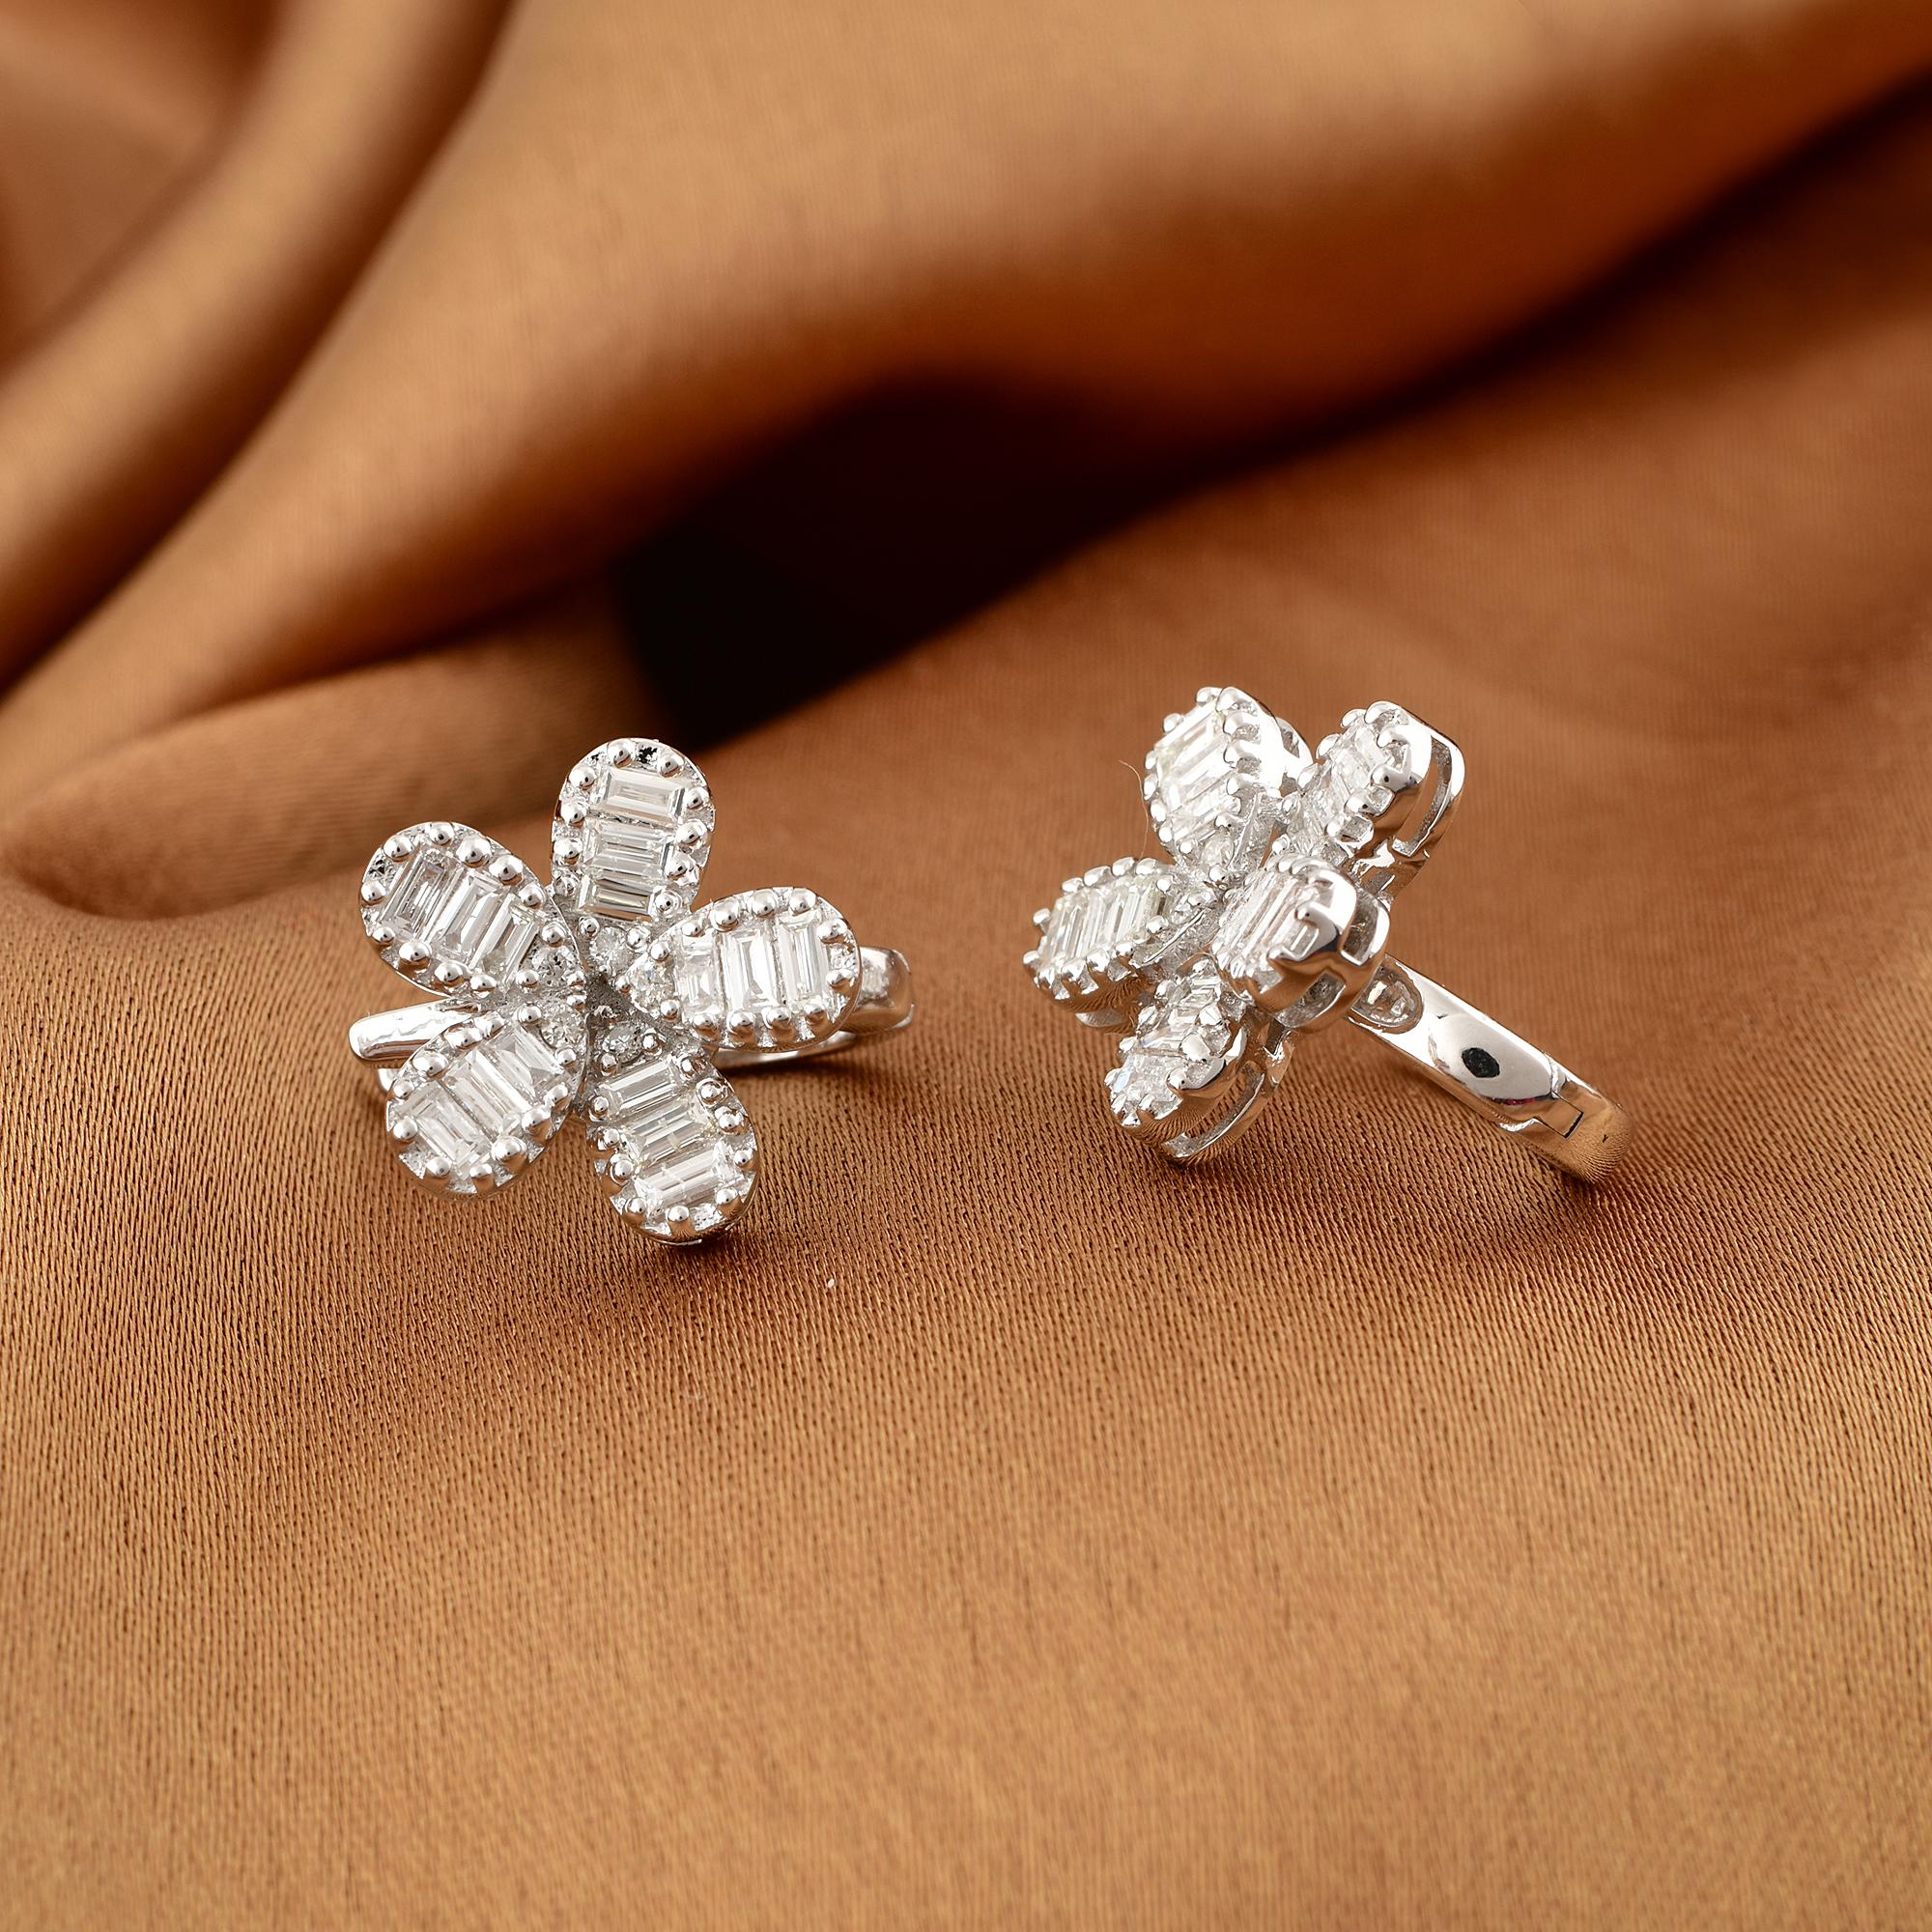 Modern 1.01 Carat Baguette Diamond Flower Stud Earrings Solid 14k White Gold Jewelry For Sale